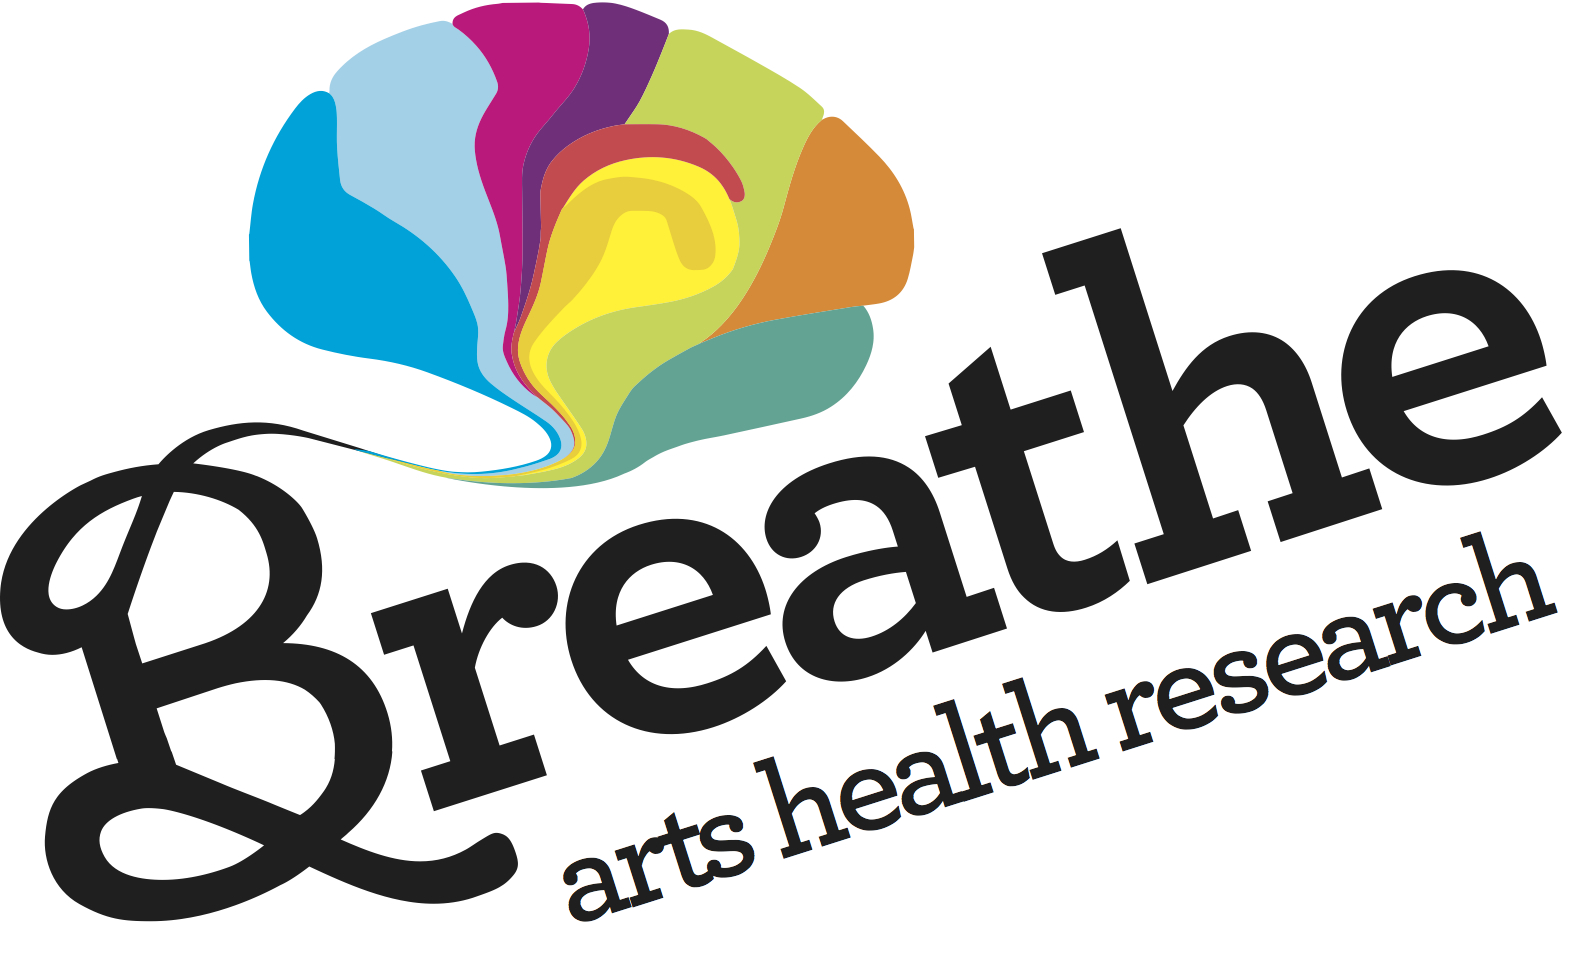 breathe arts health research